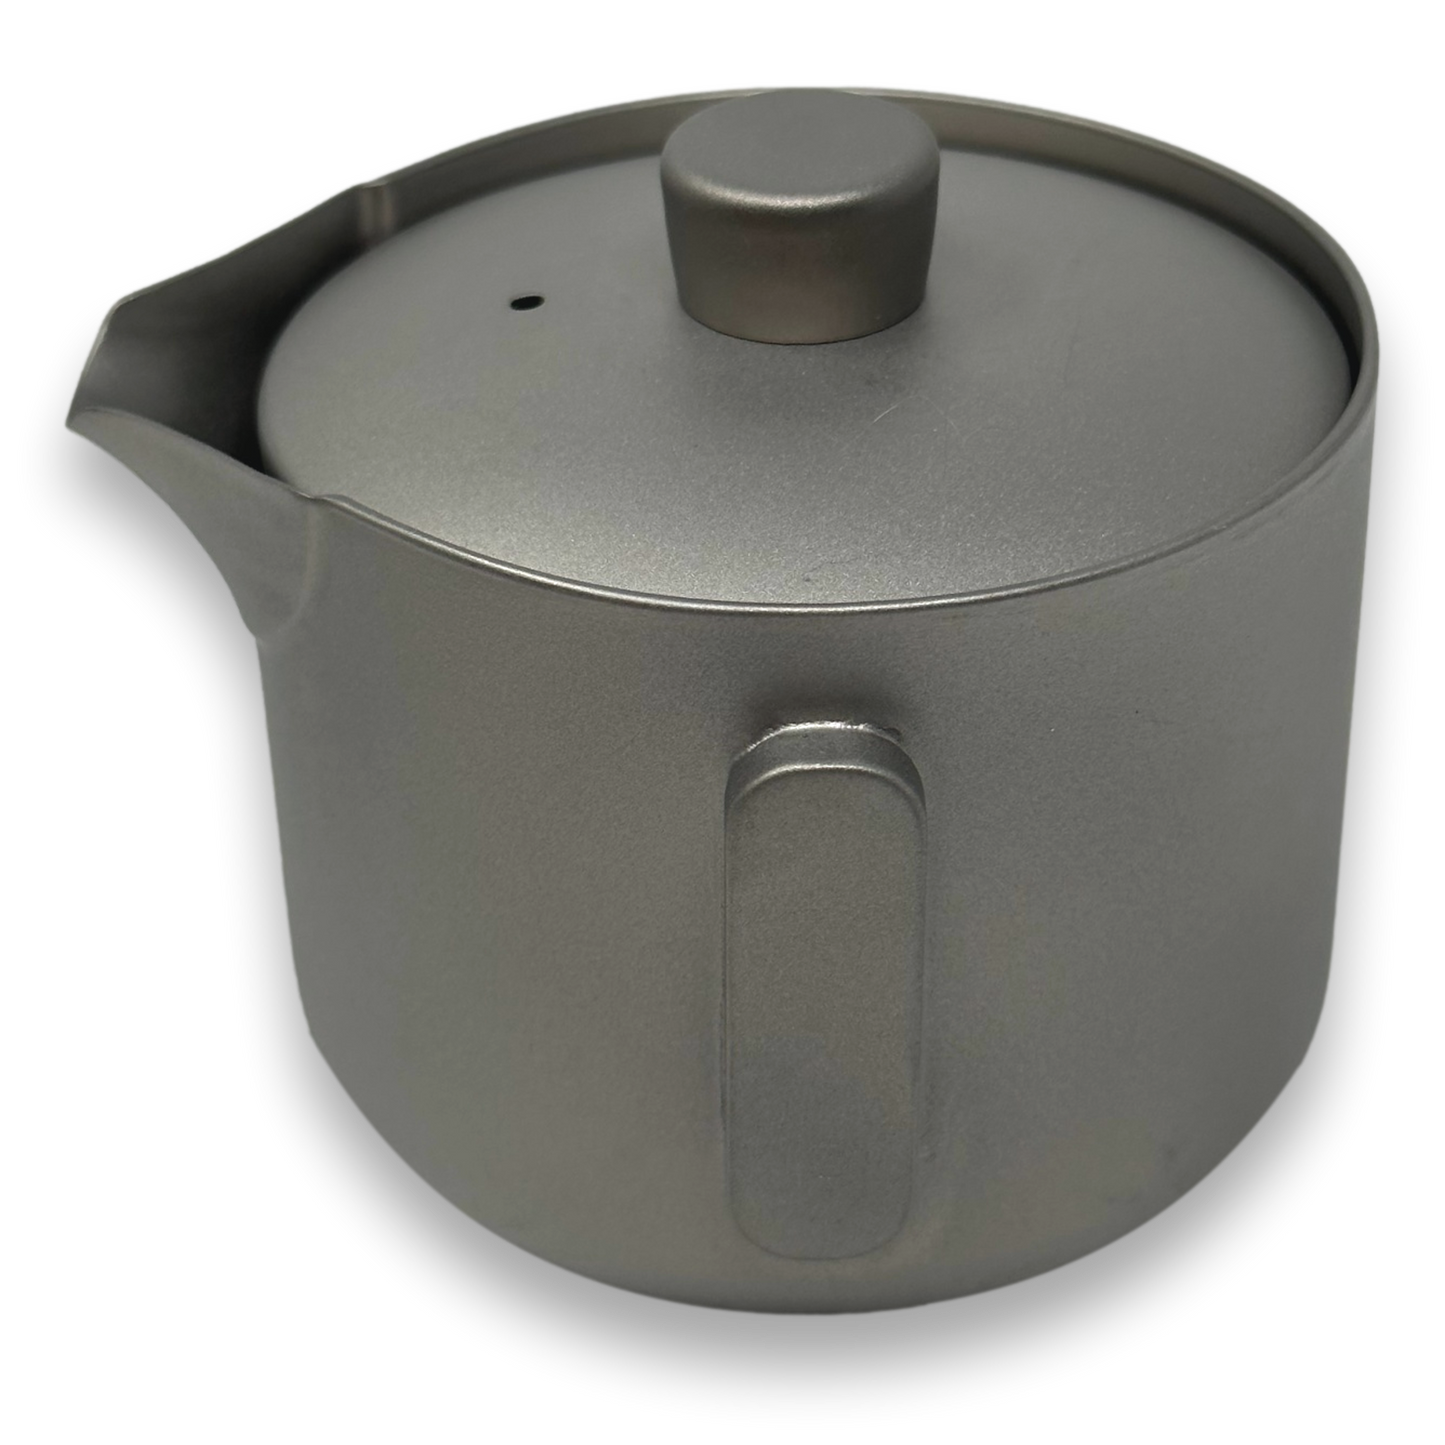 Valtcan Titanium Gaiwan Double Wall Teapot Single Serve Brew Tea Puer Leaves